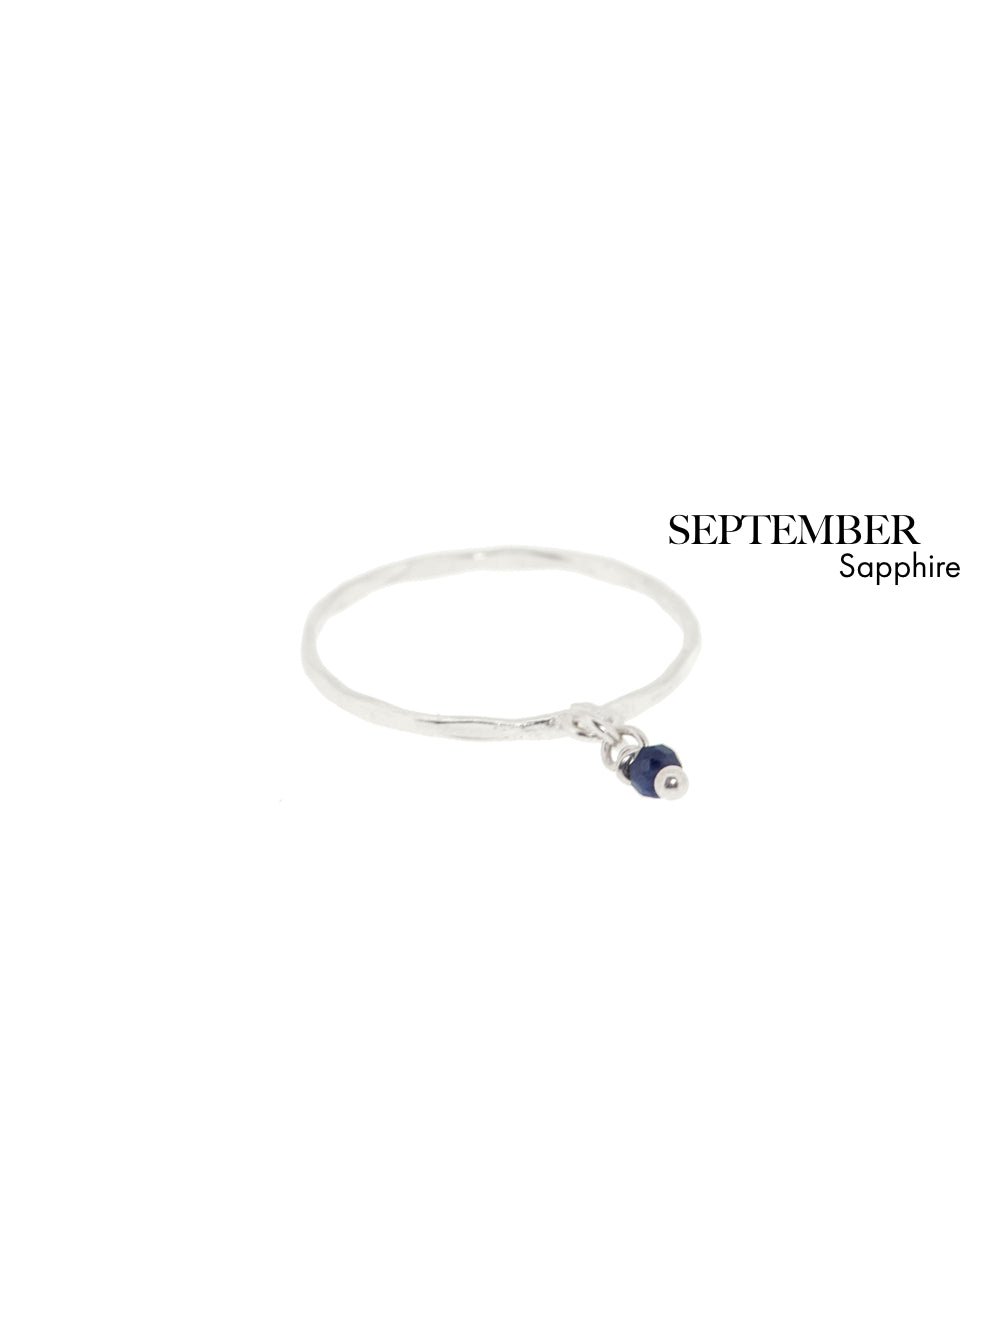 Birthstone ring September - Sapphire | 925 Sterling Silver